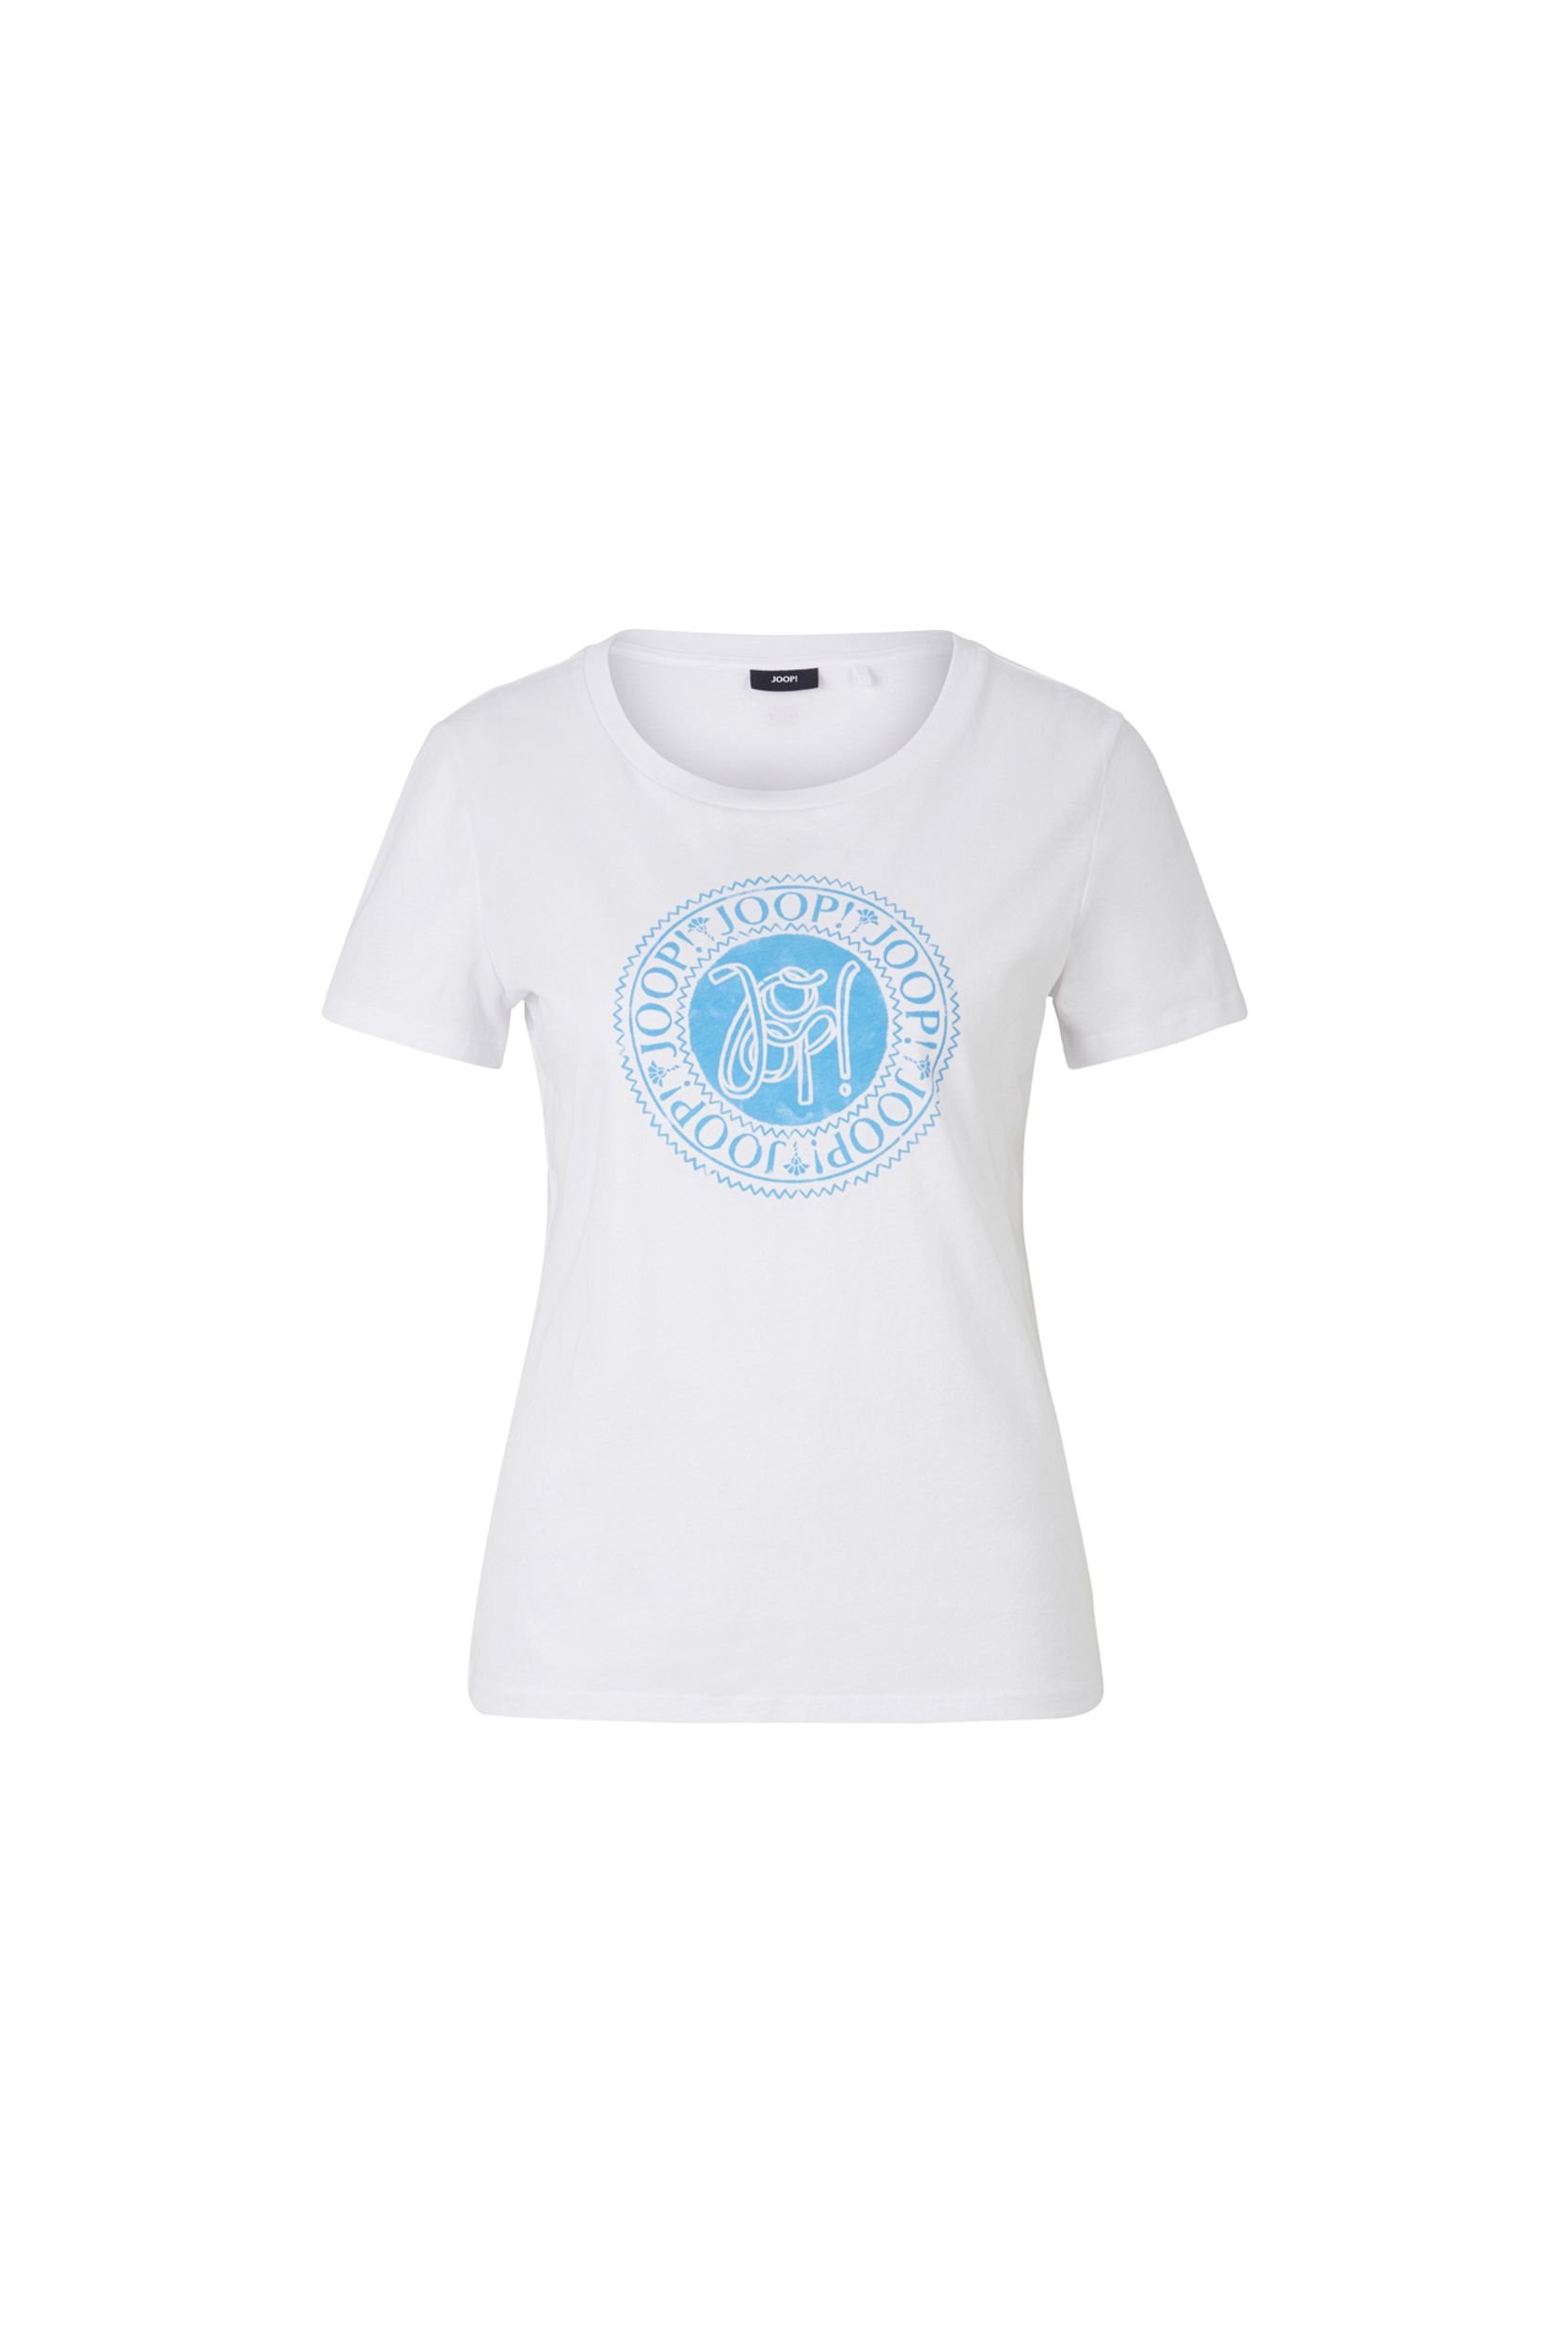 Joop Baumwoll-T-Shirt in Weiss/Blau